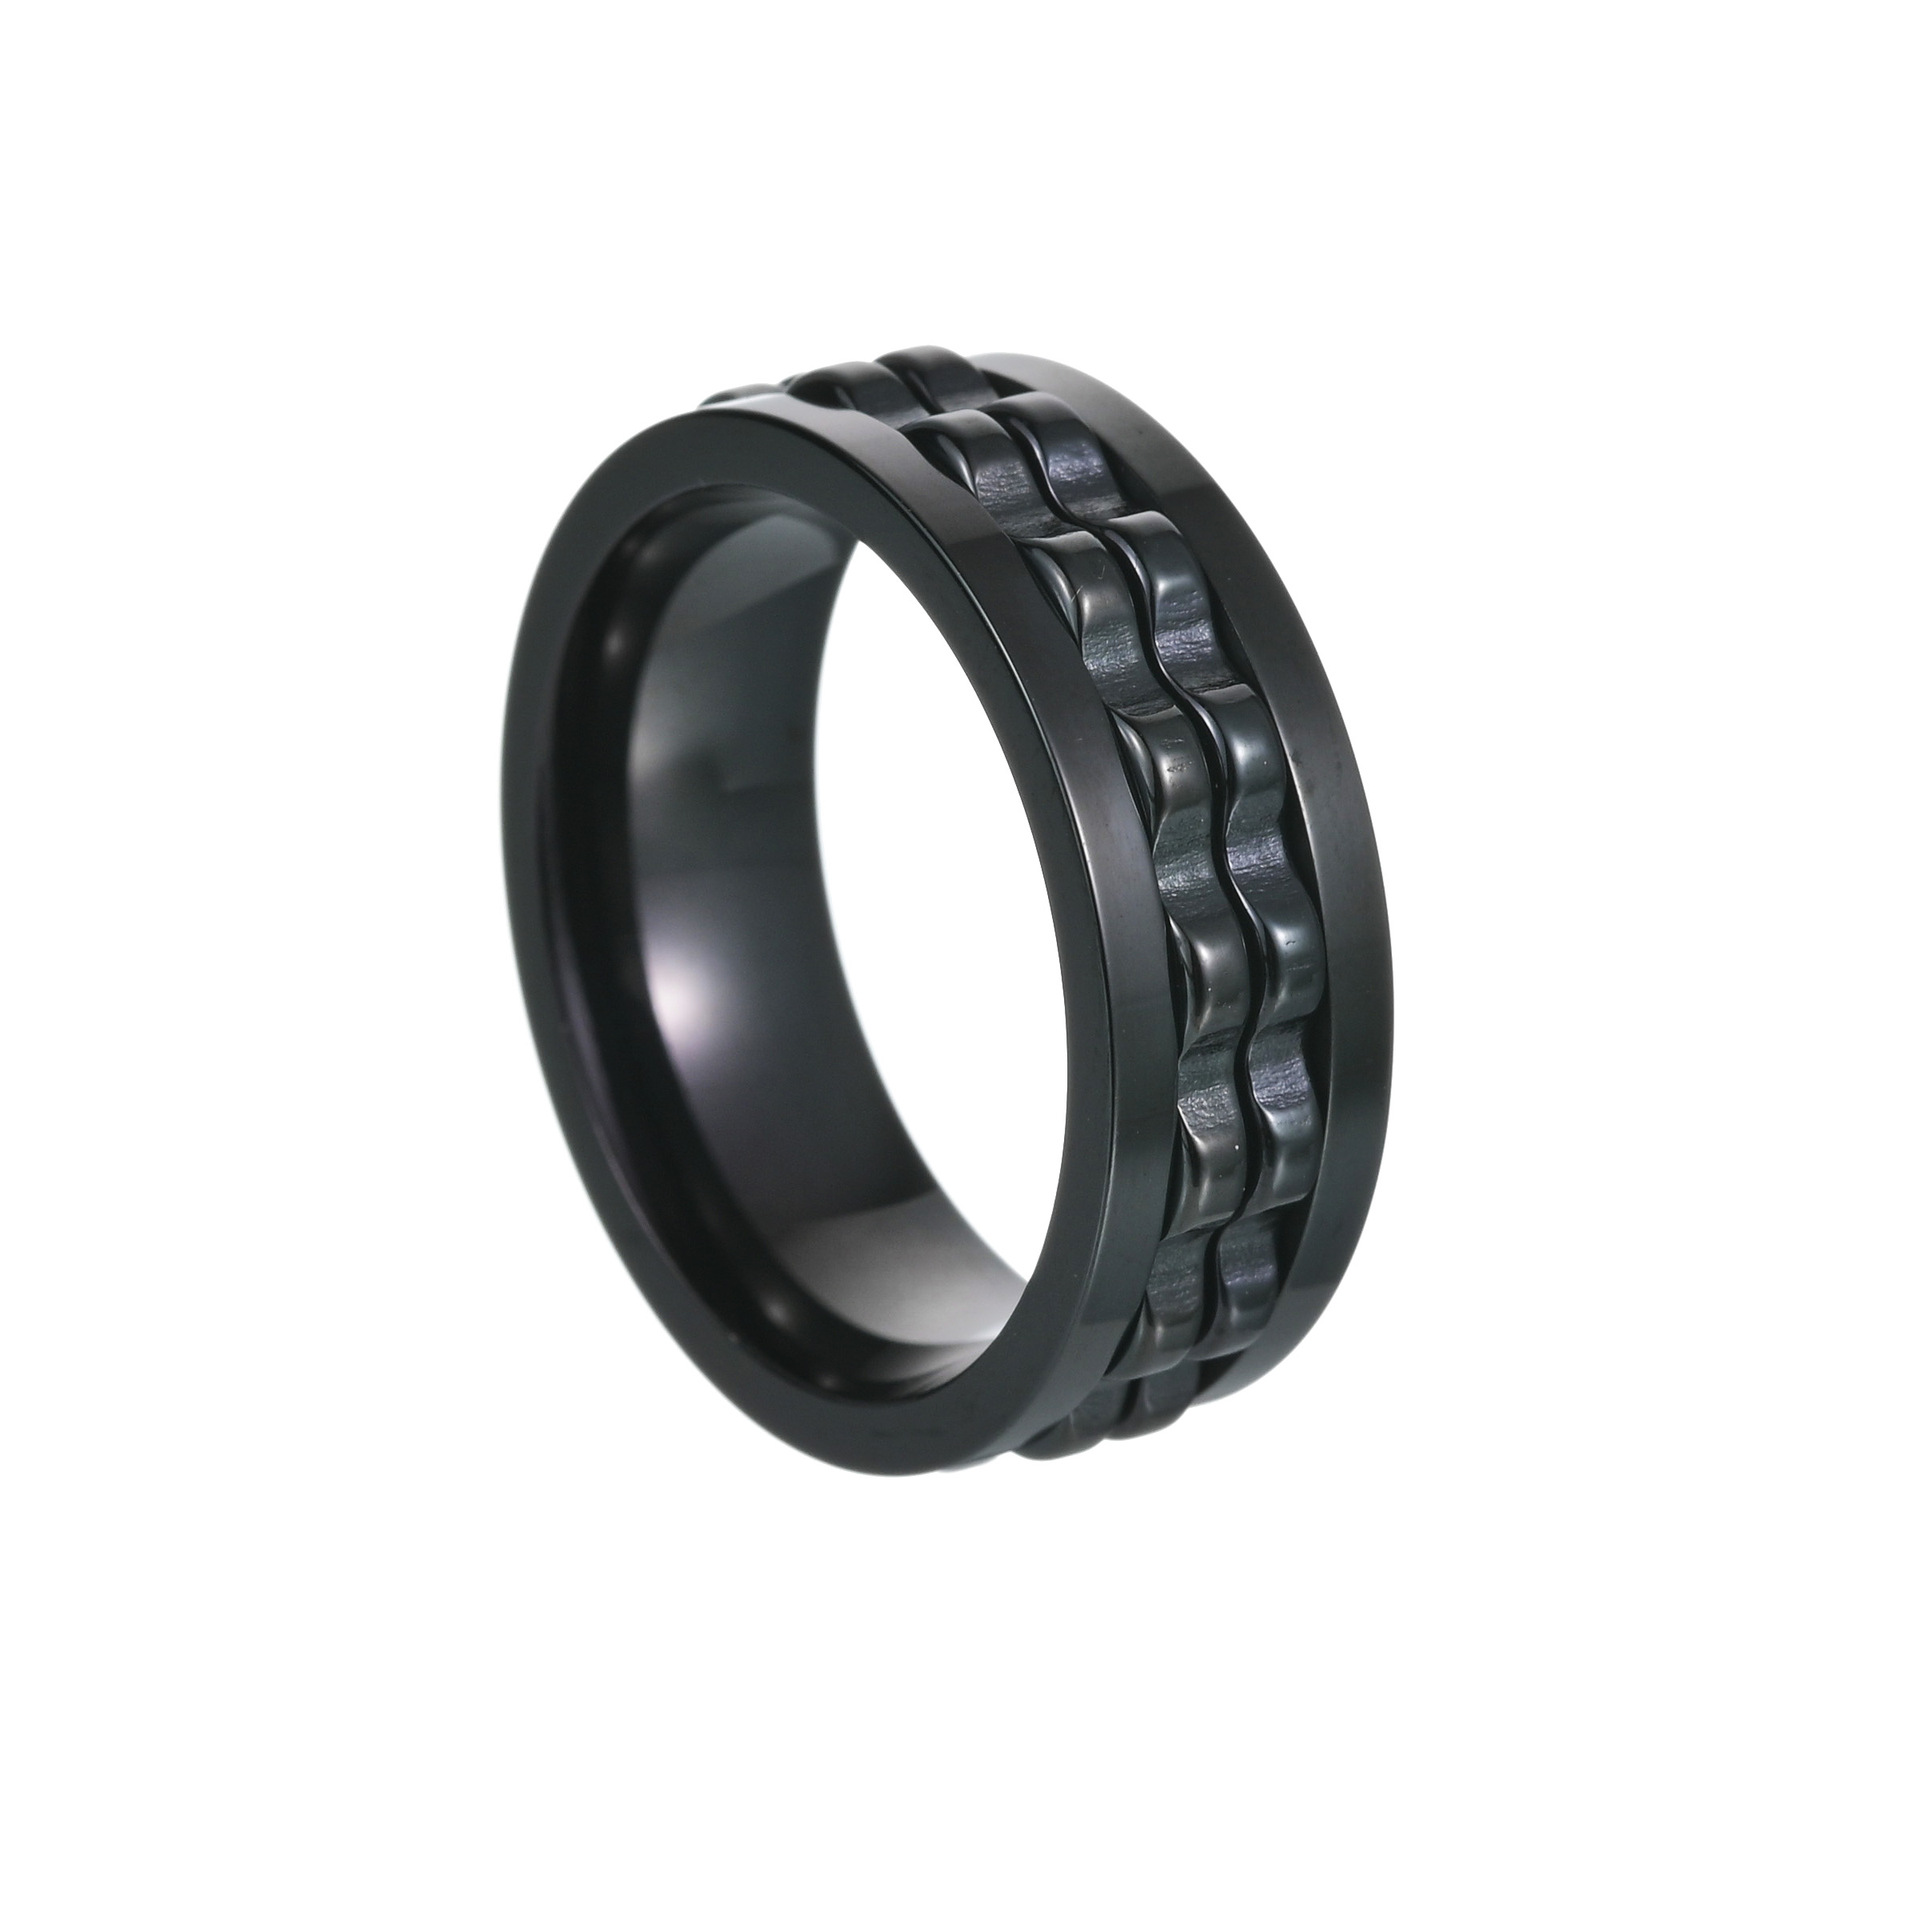 6:Black Ring   Black Gear